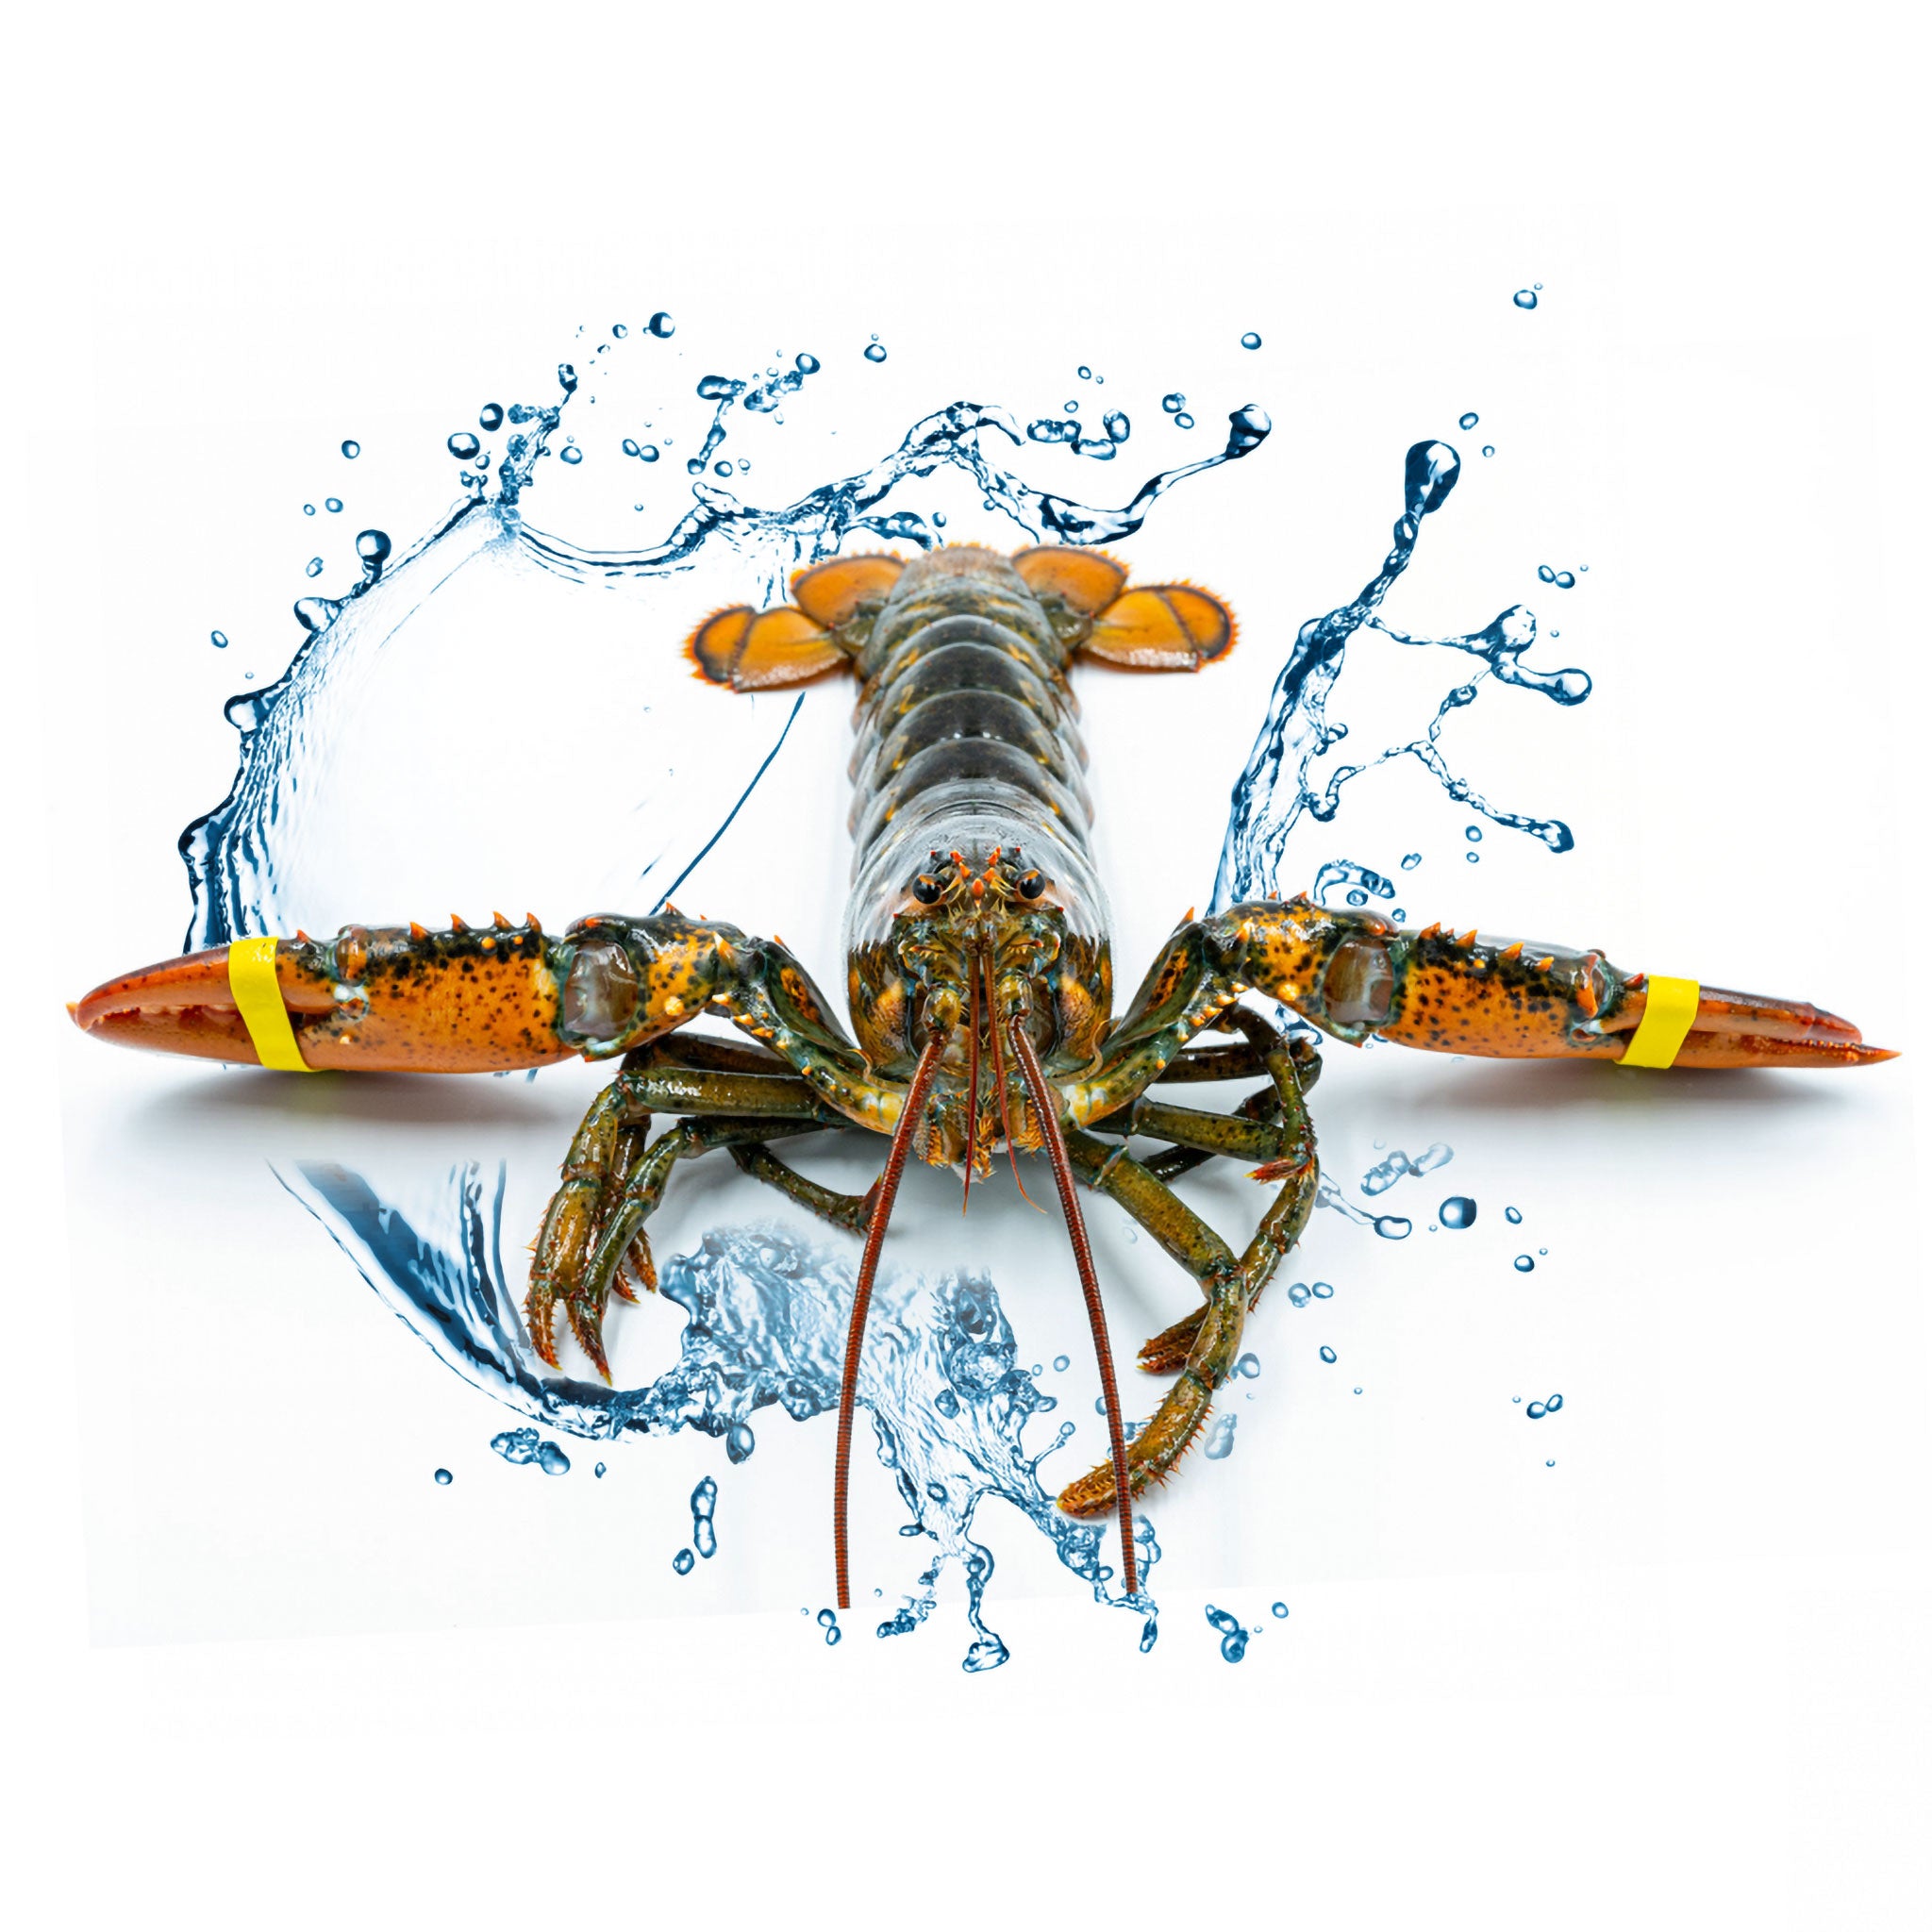 single live boston lobster with water splash